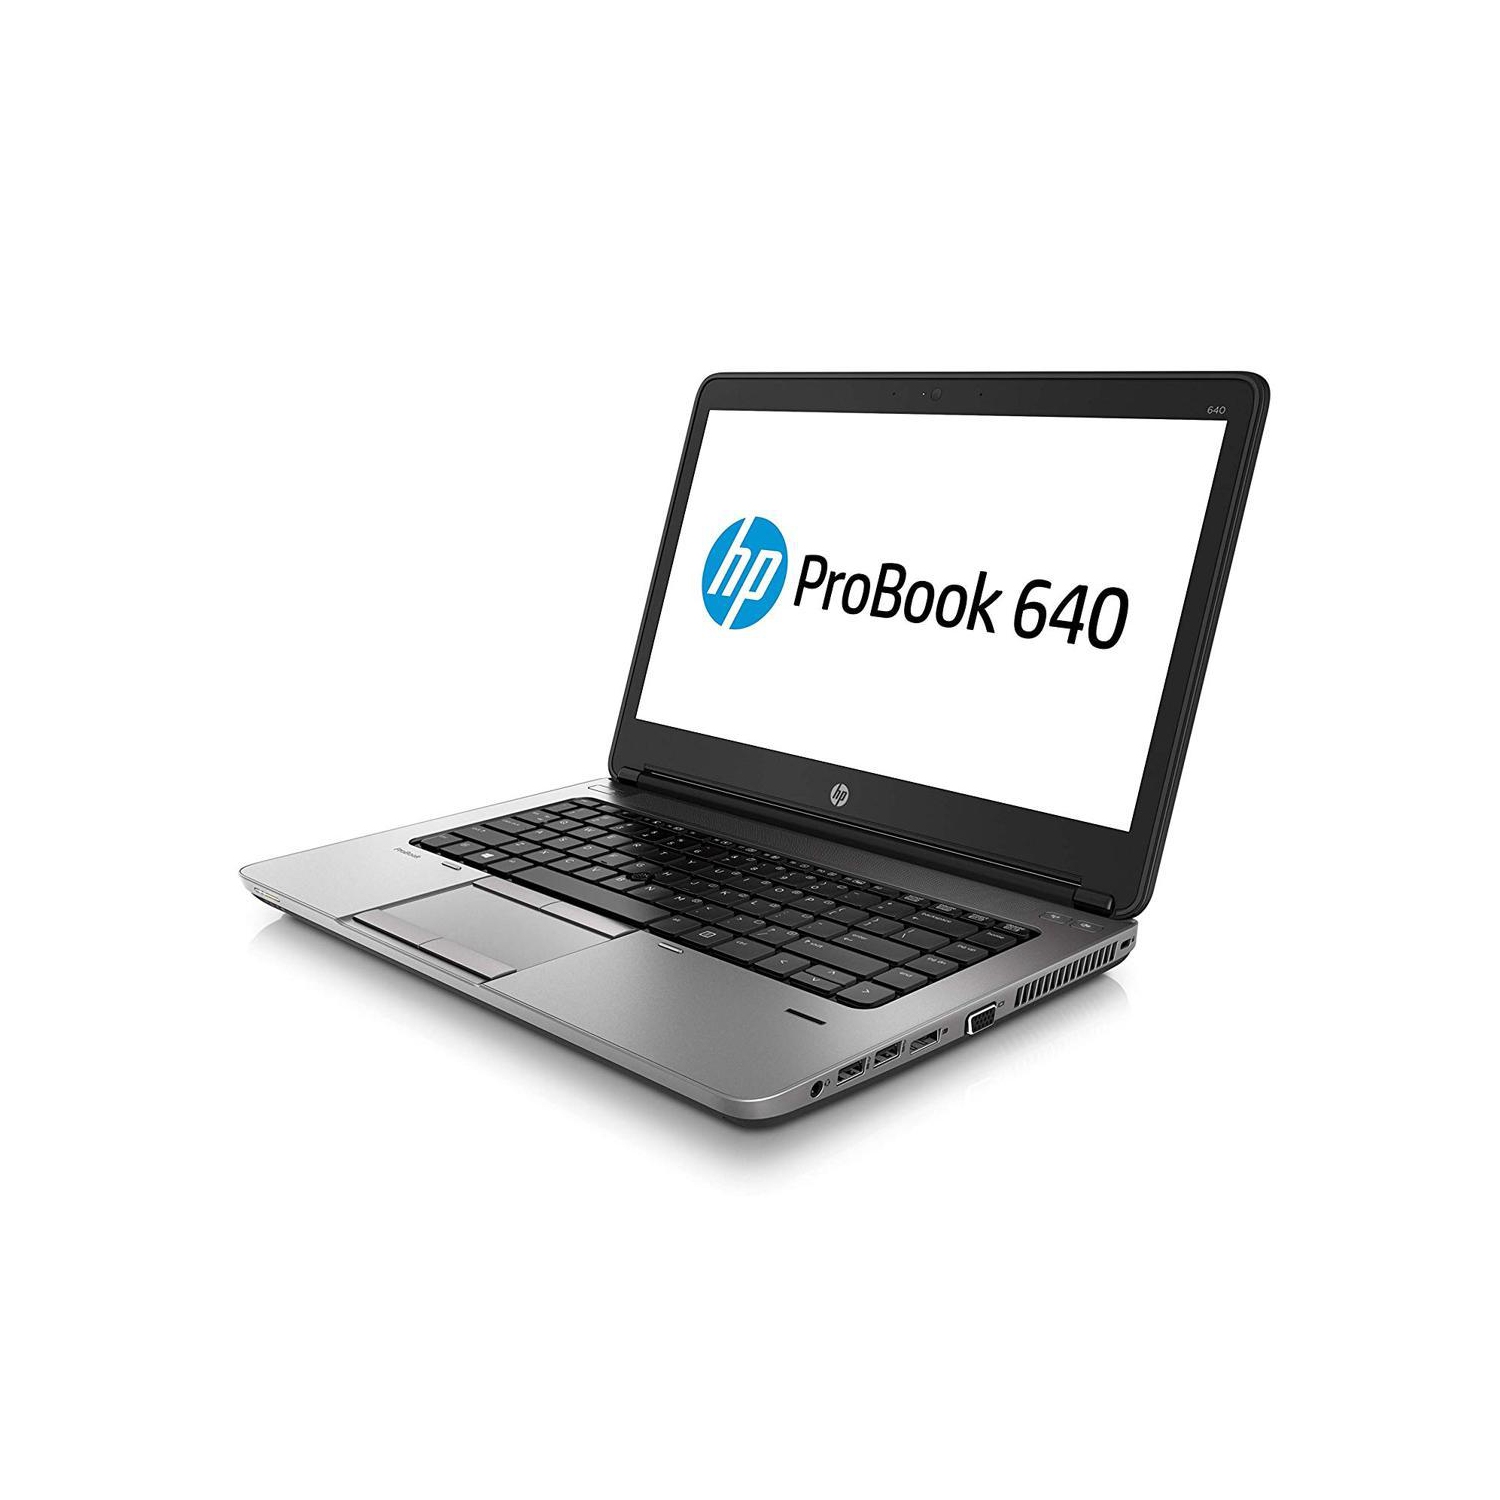 Refurbished (Excellent) - HP ProBook 640 G1 Laptop: Intel Core i5 4200M 2.50GHz, 4GB RAM, 500 GB, 14", Win 10 Pro -Certified Refurbished